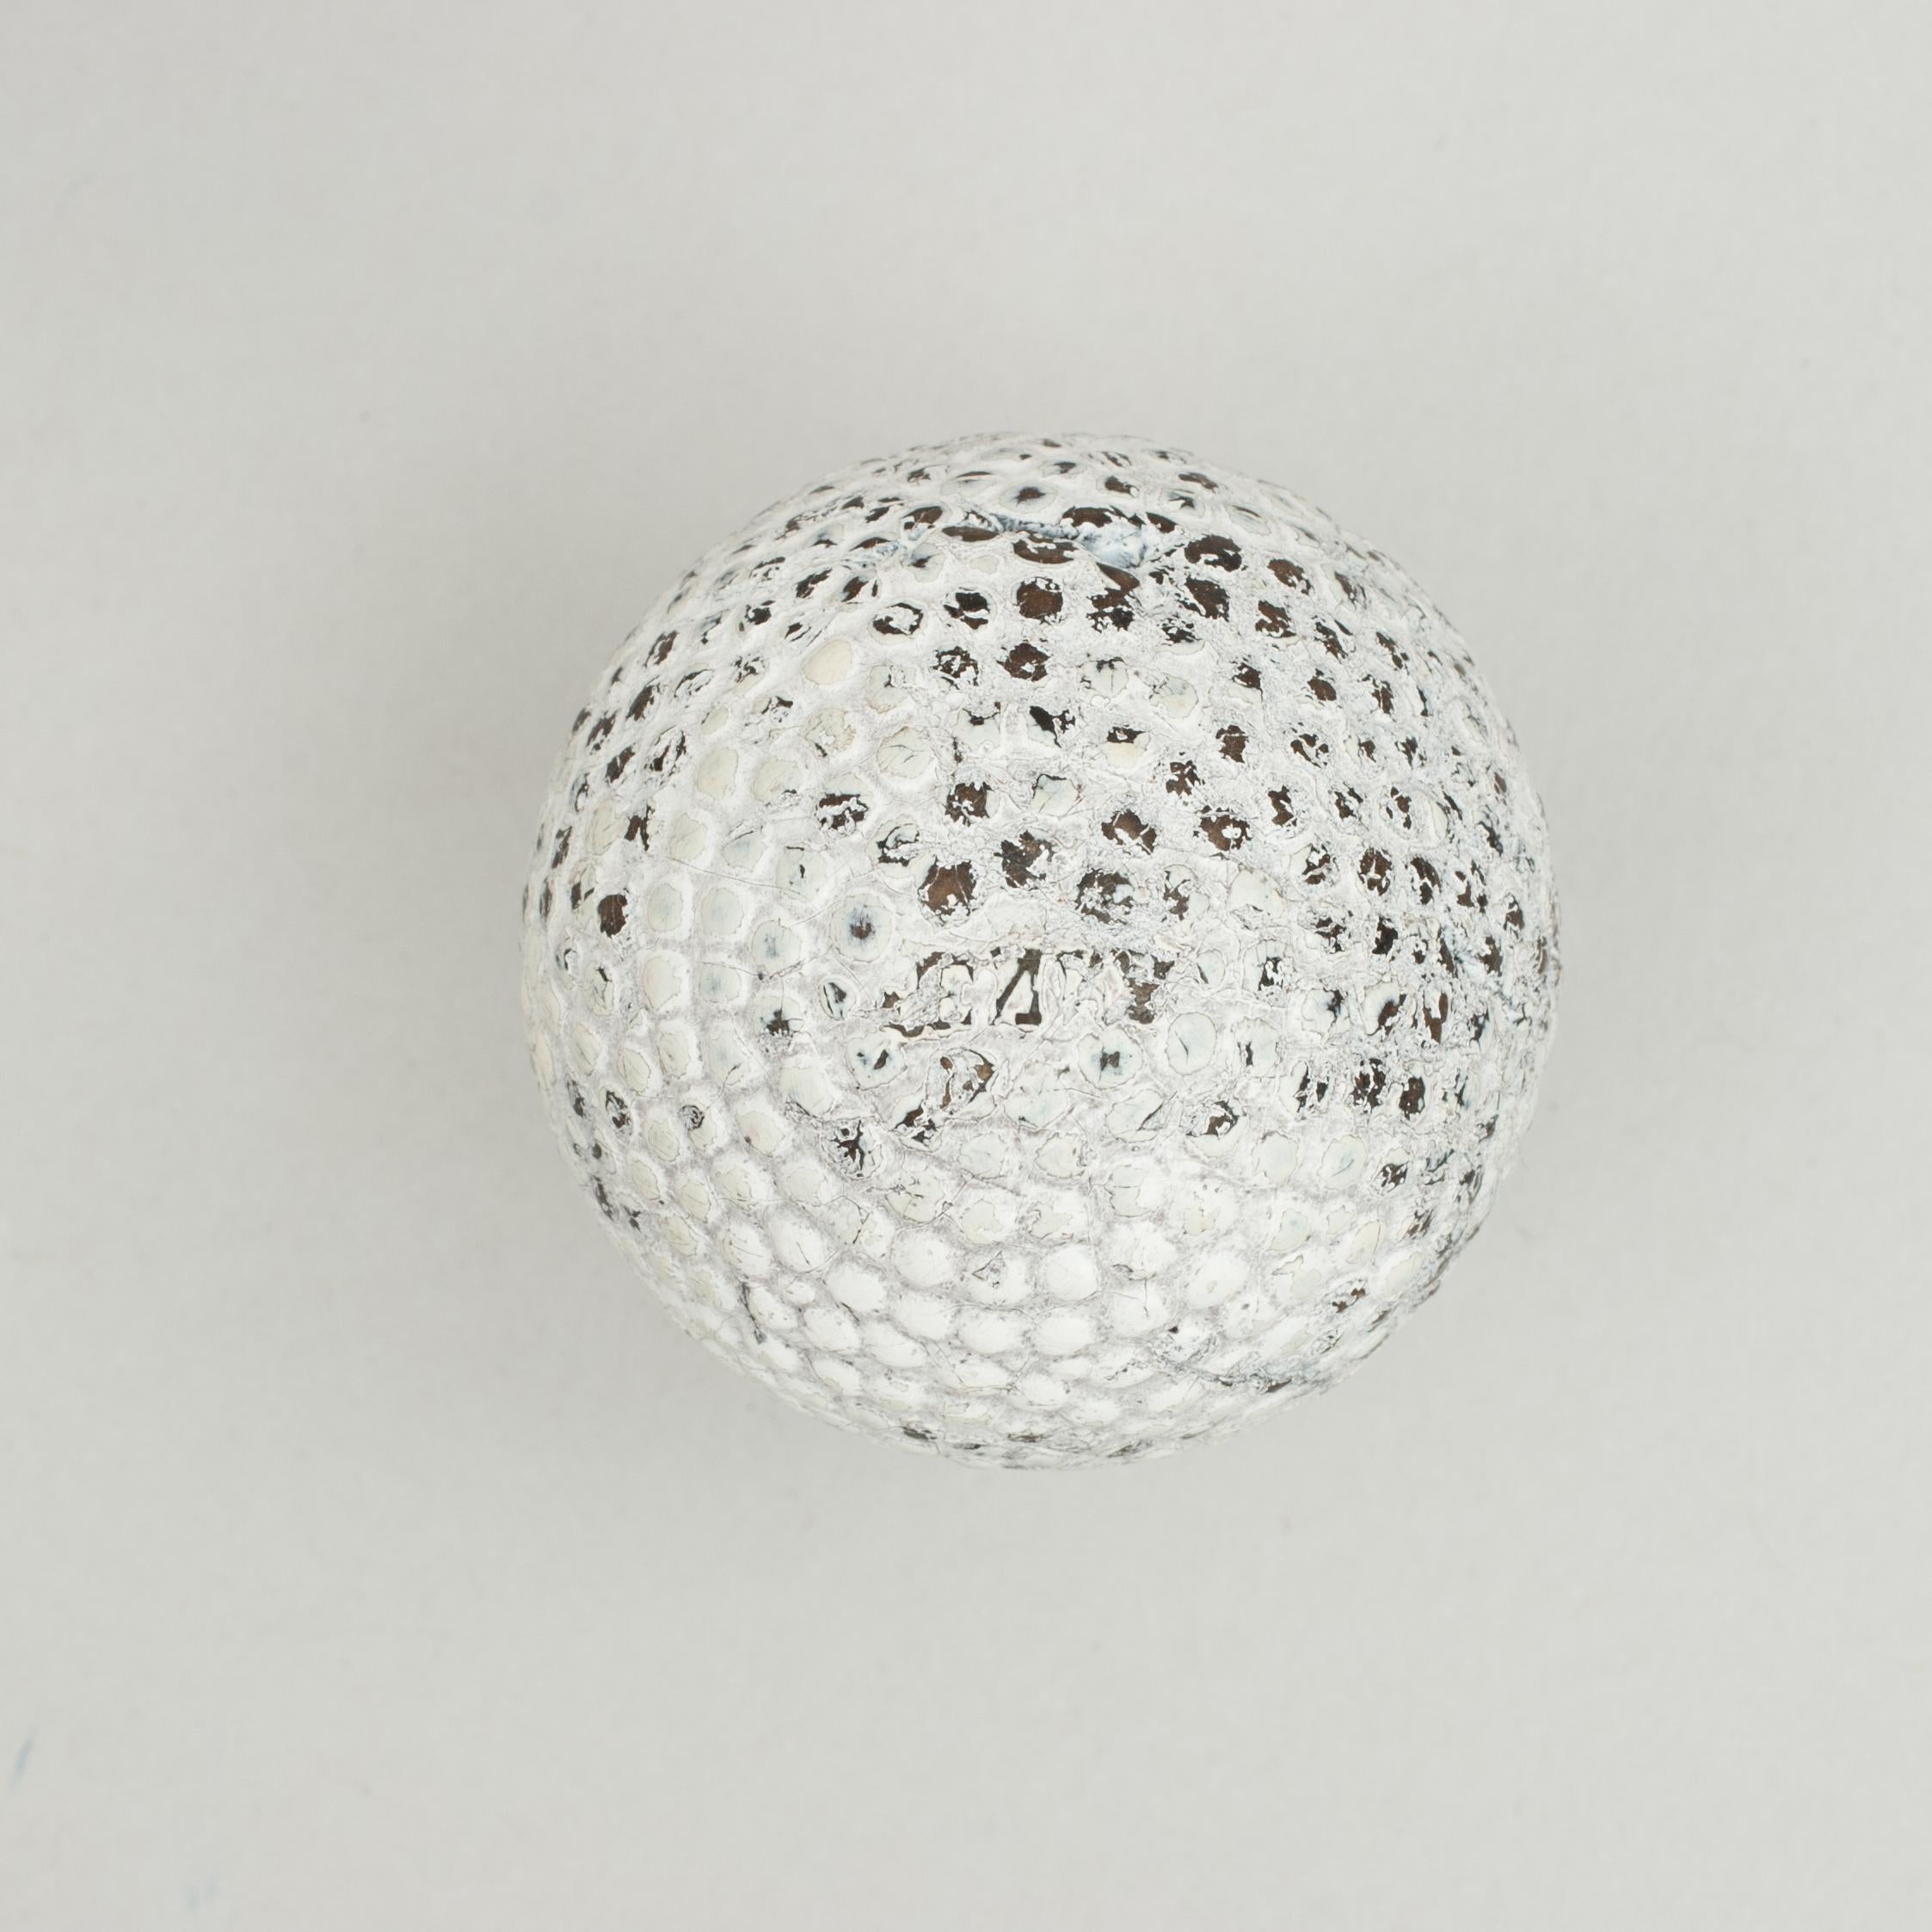 English Antique Golf Ball, ;Jenny', Bramble Pattern Rubber Core, circa 1910